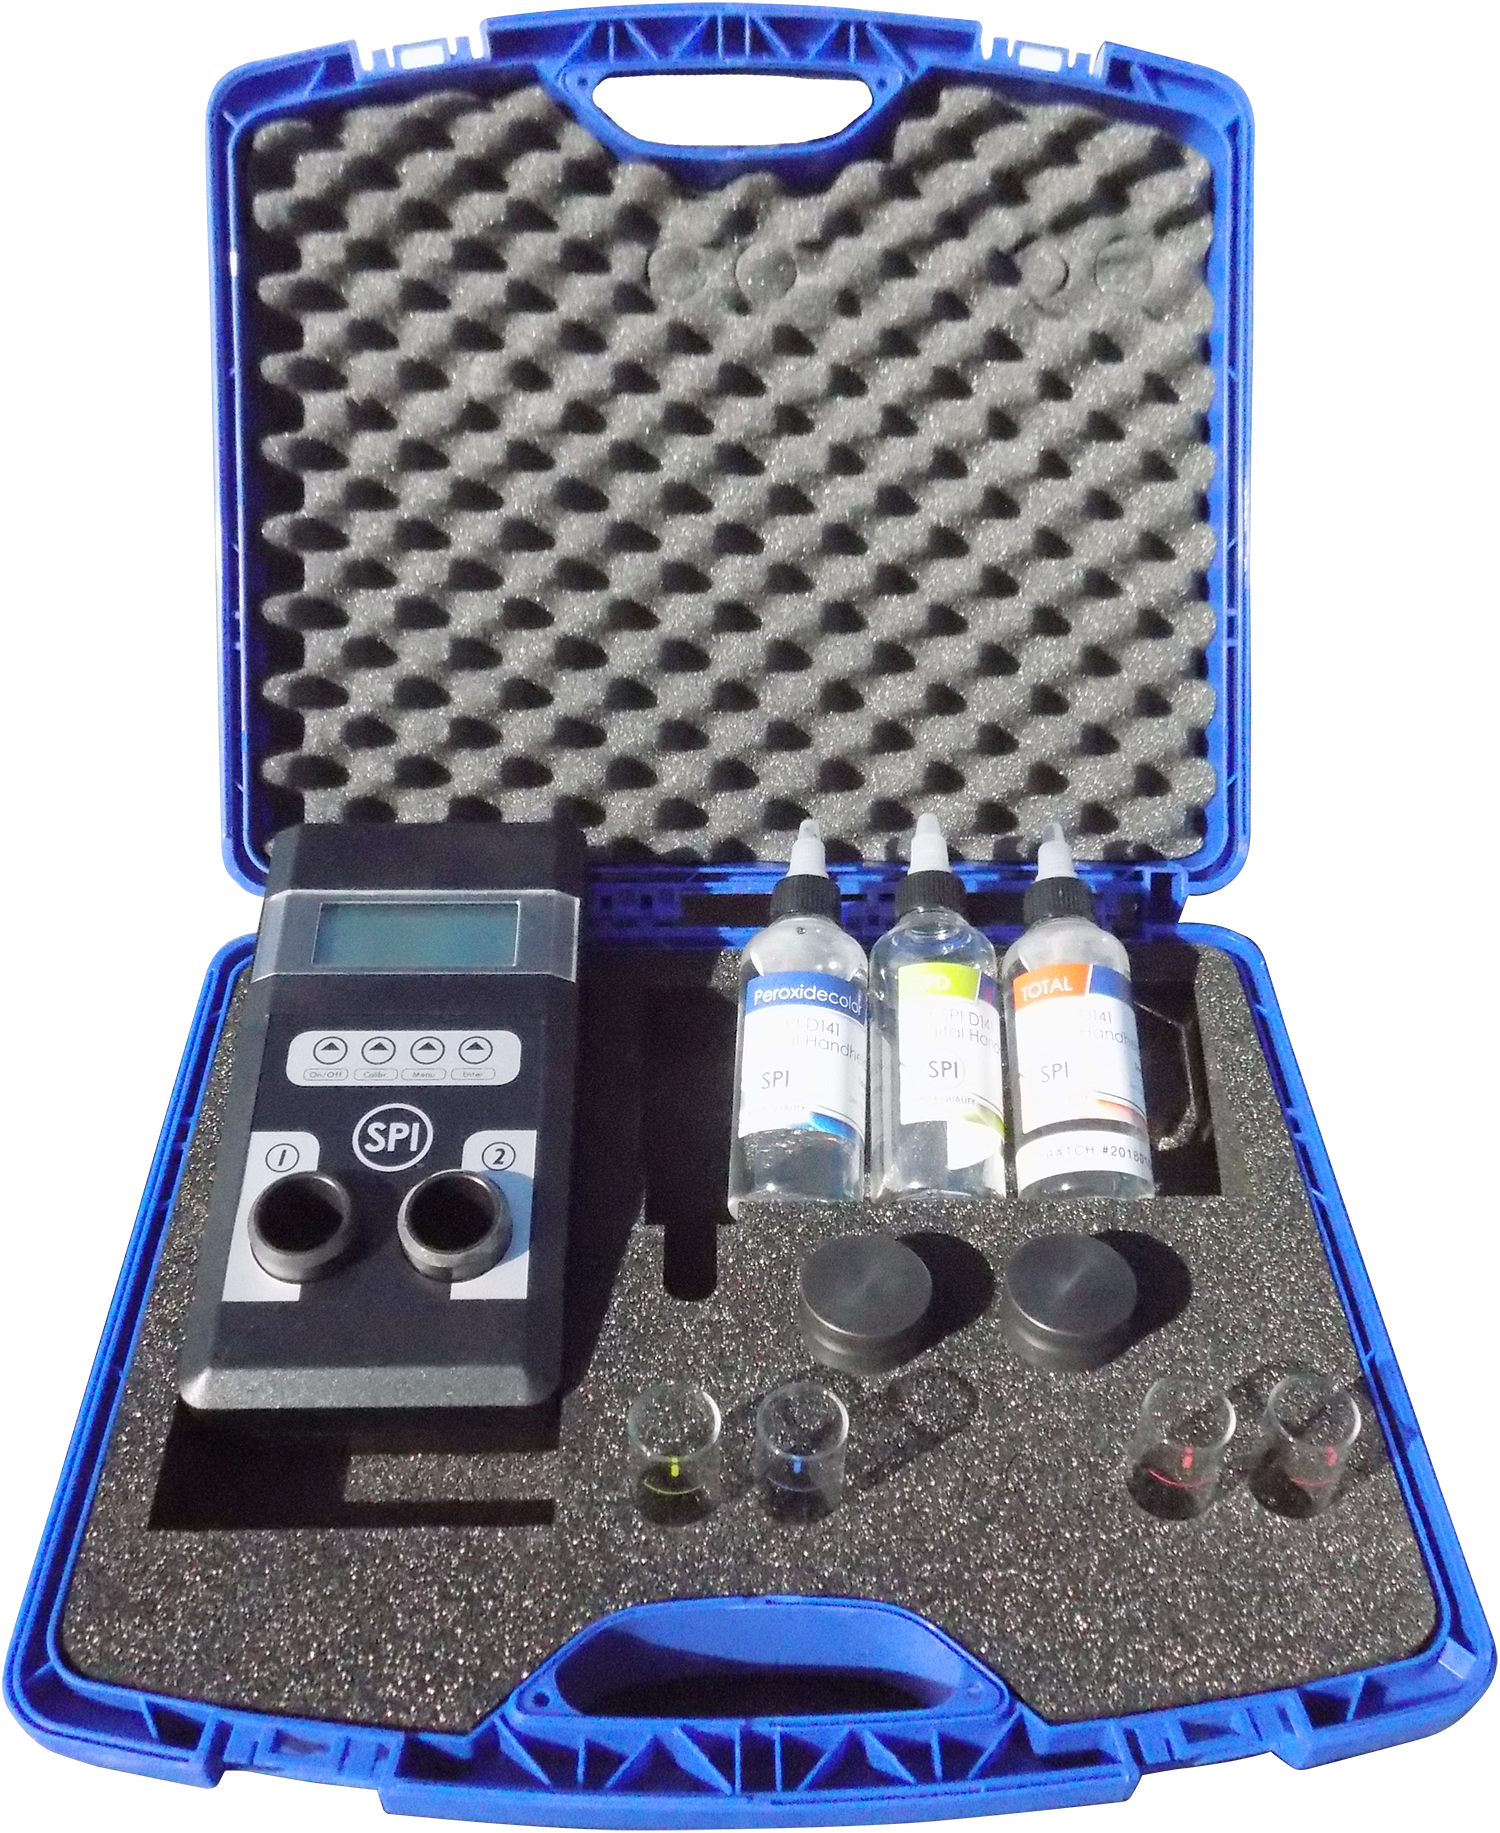 "SPI - On The Go" by SanEcoTec also called SPI - Handheld. Water Quality Testing Kit